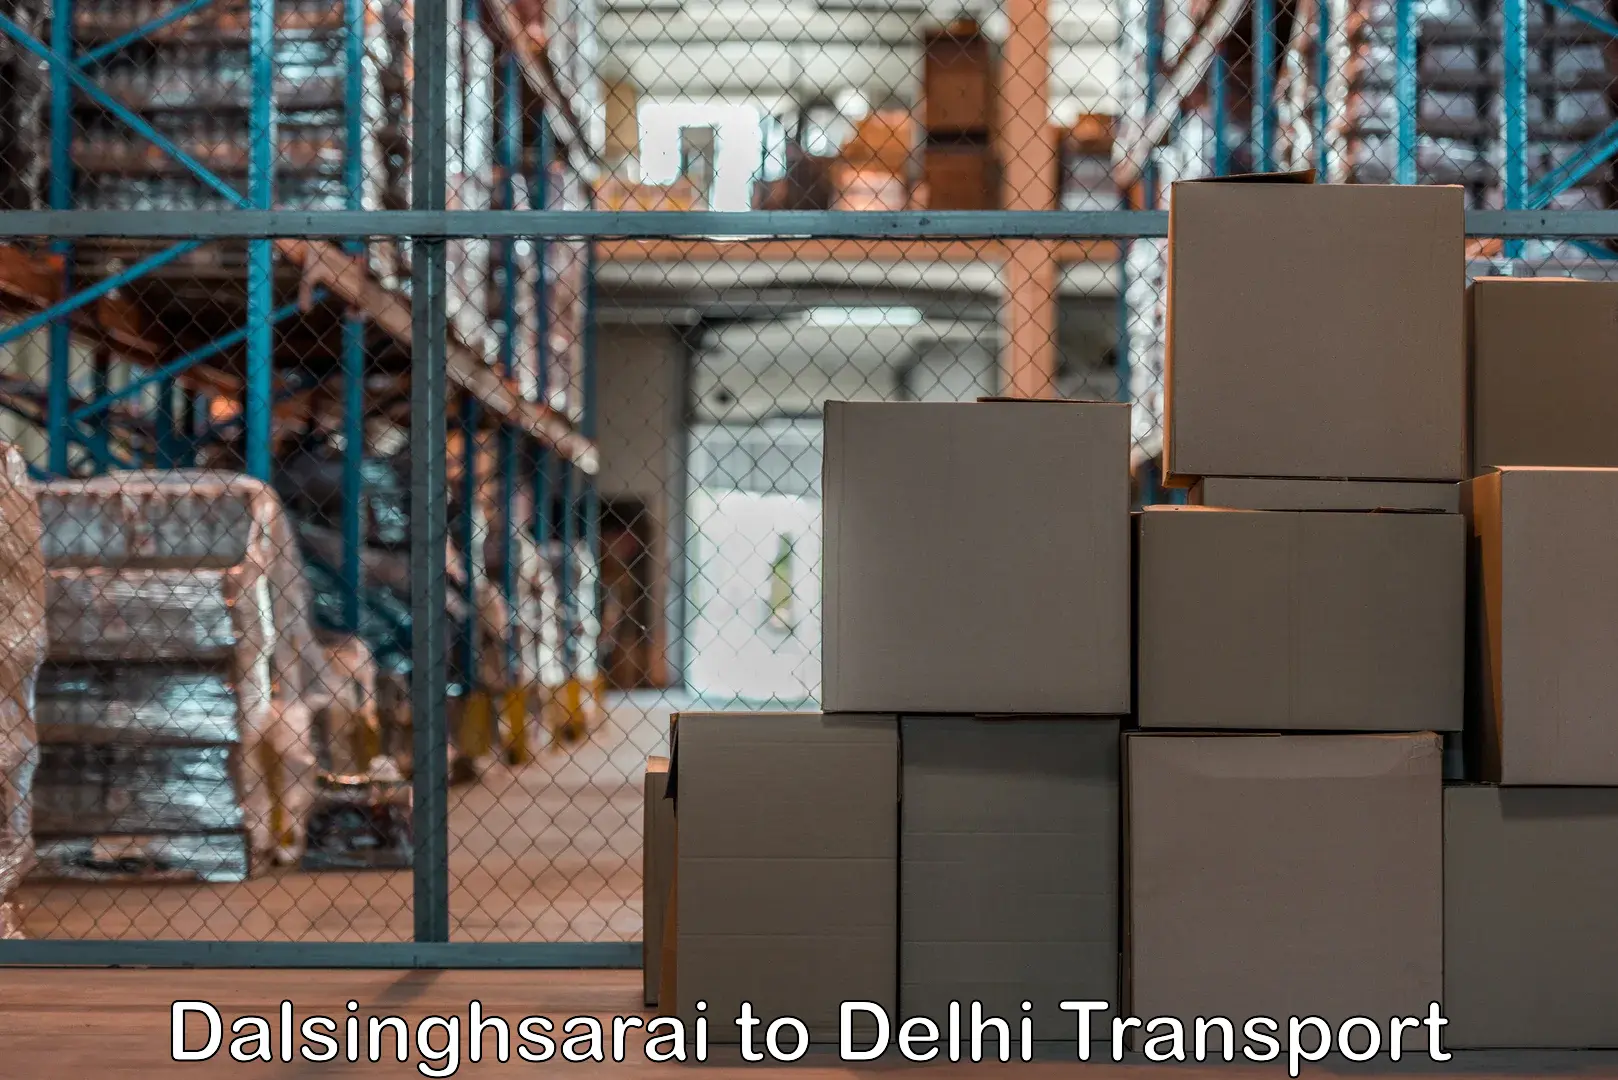 Truck transport companies in India Dalsinghsarai to East Delhi